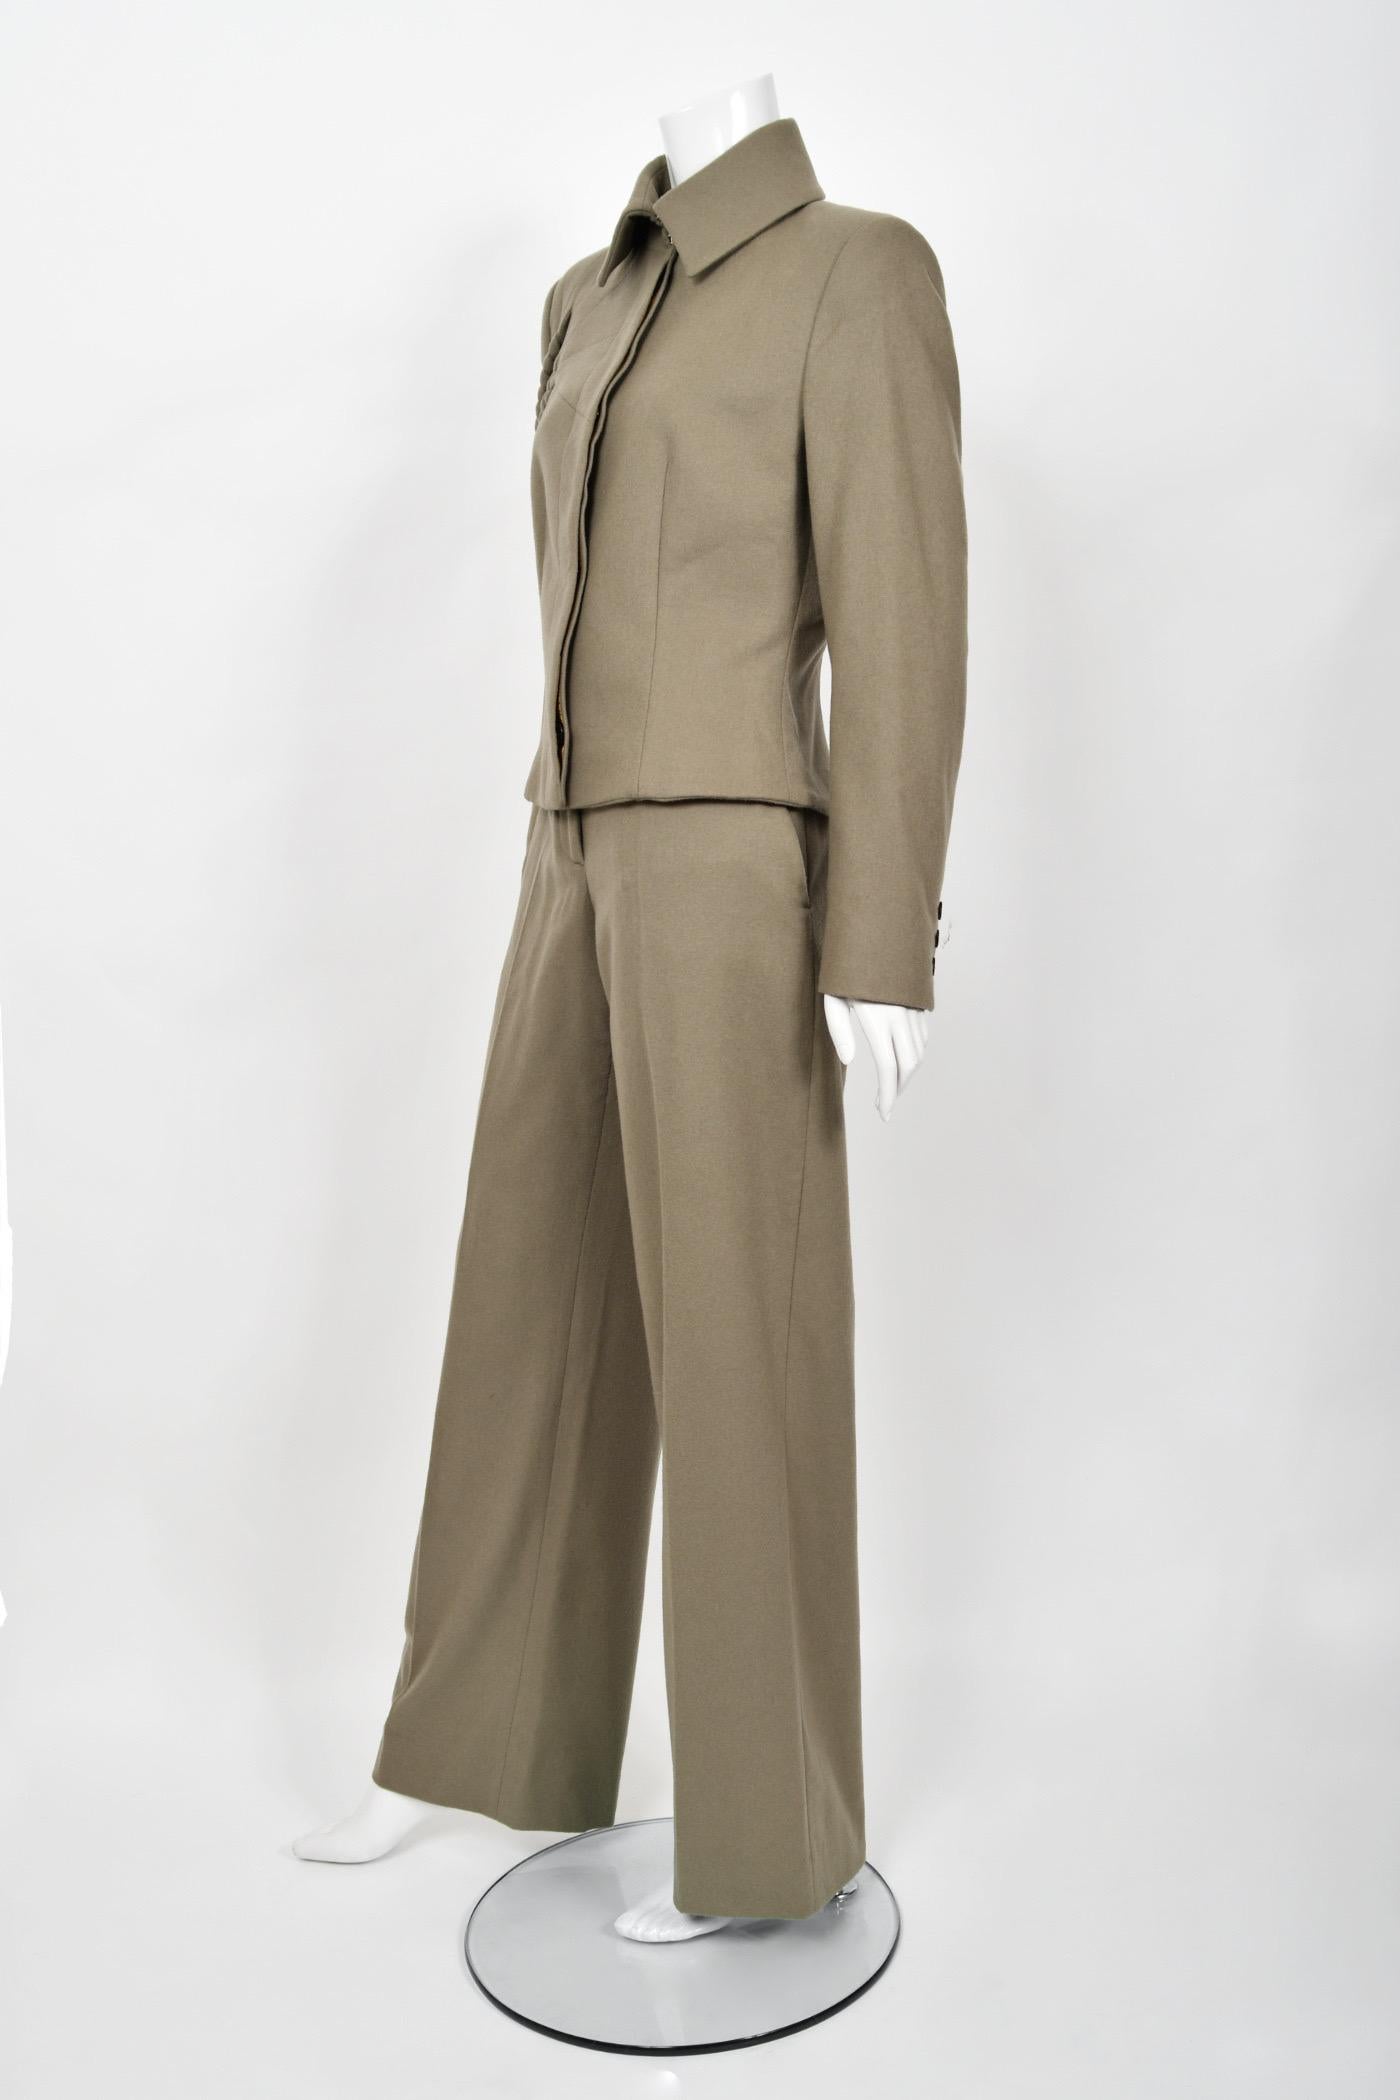 2001 Alexander McQueen Documented Runway Moss-Green Wool Braided Jacket Pantsuit For Sale 7